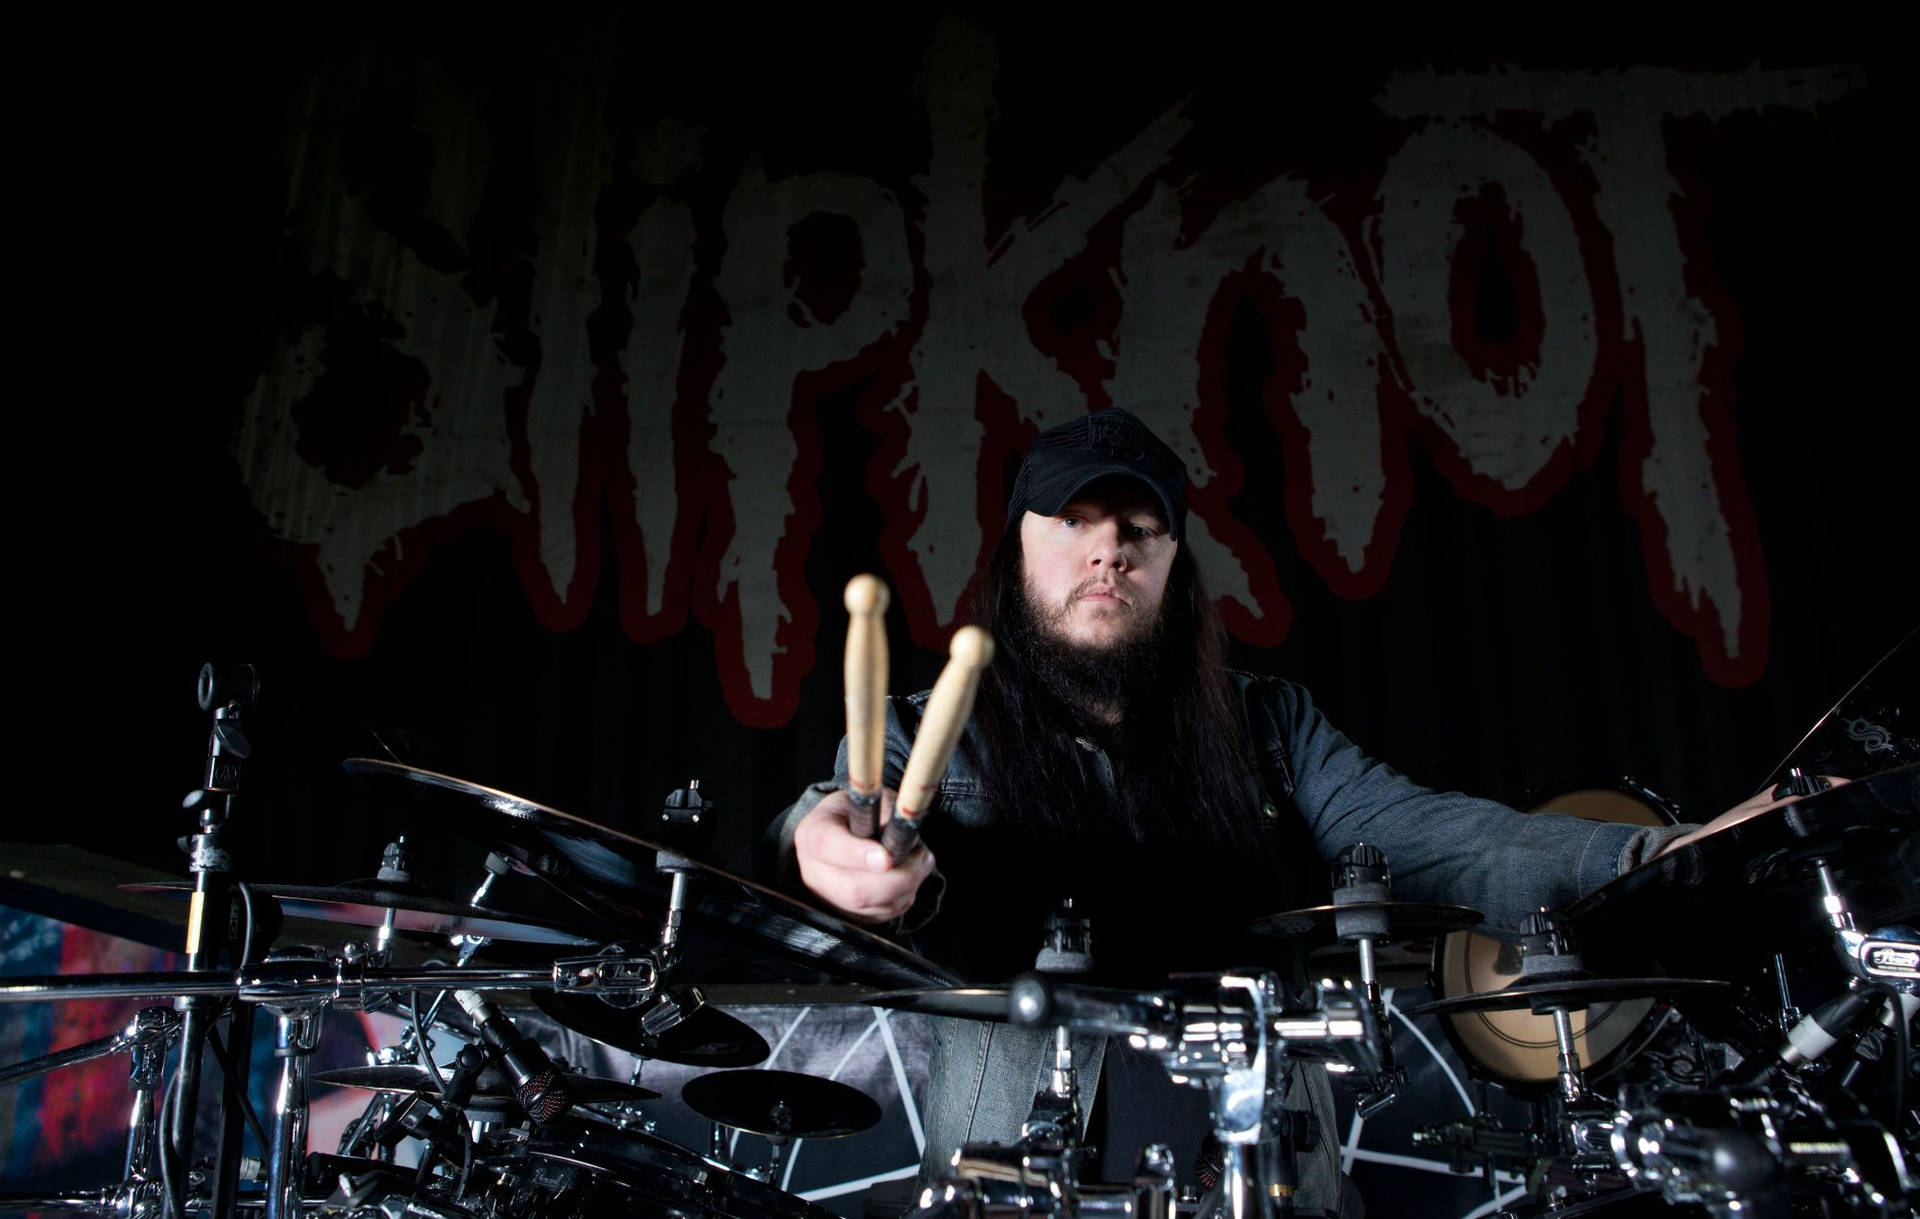 Joey Jordison Slipknot Drummer Background